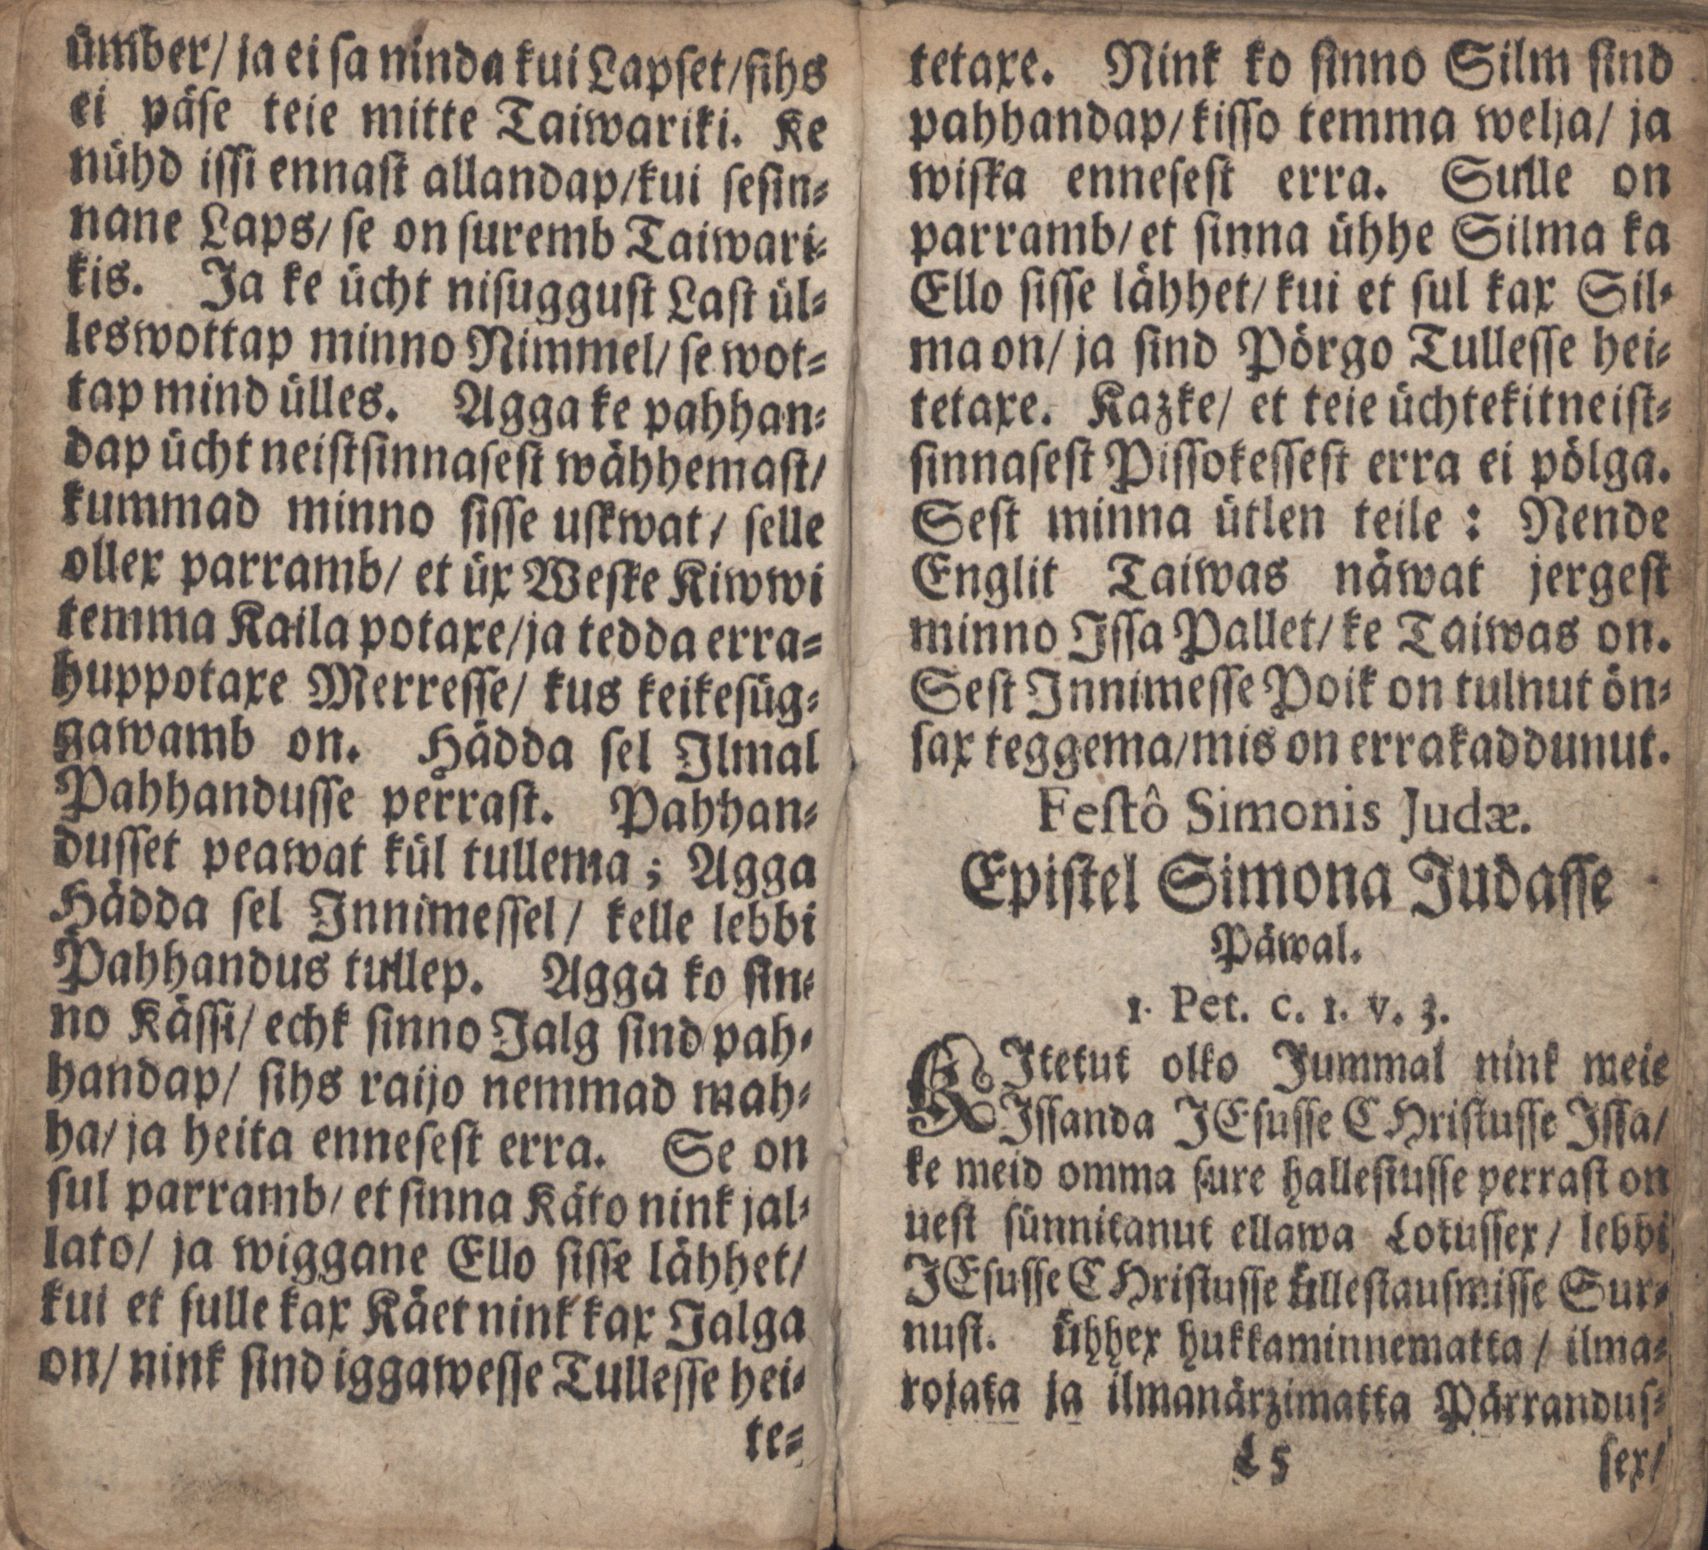 Ewangeliummit Nink Epistlit (1700) | 121. Основной текст